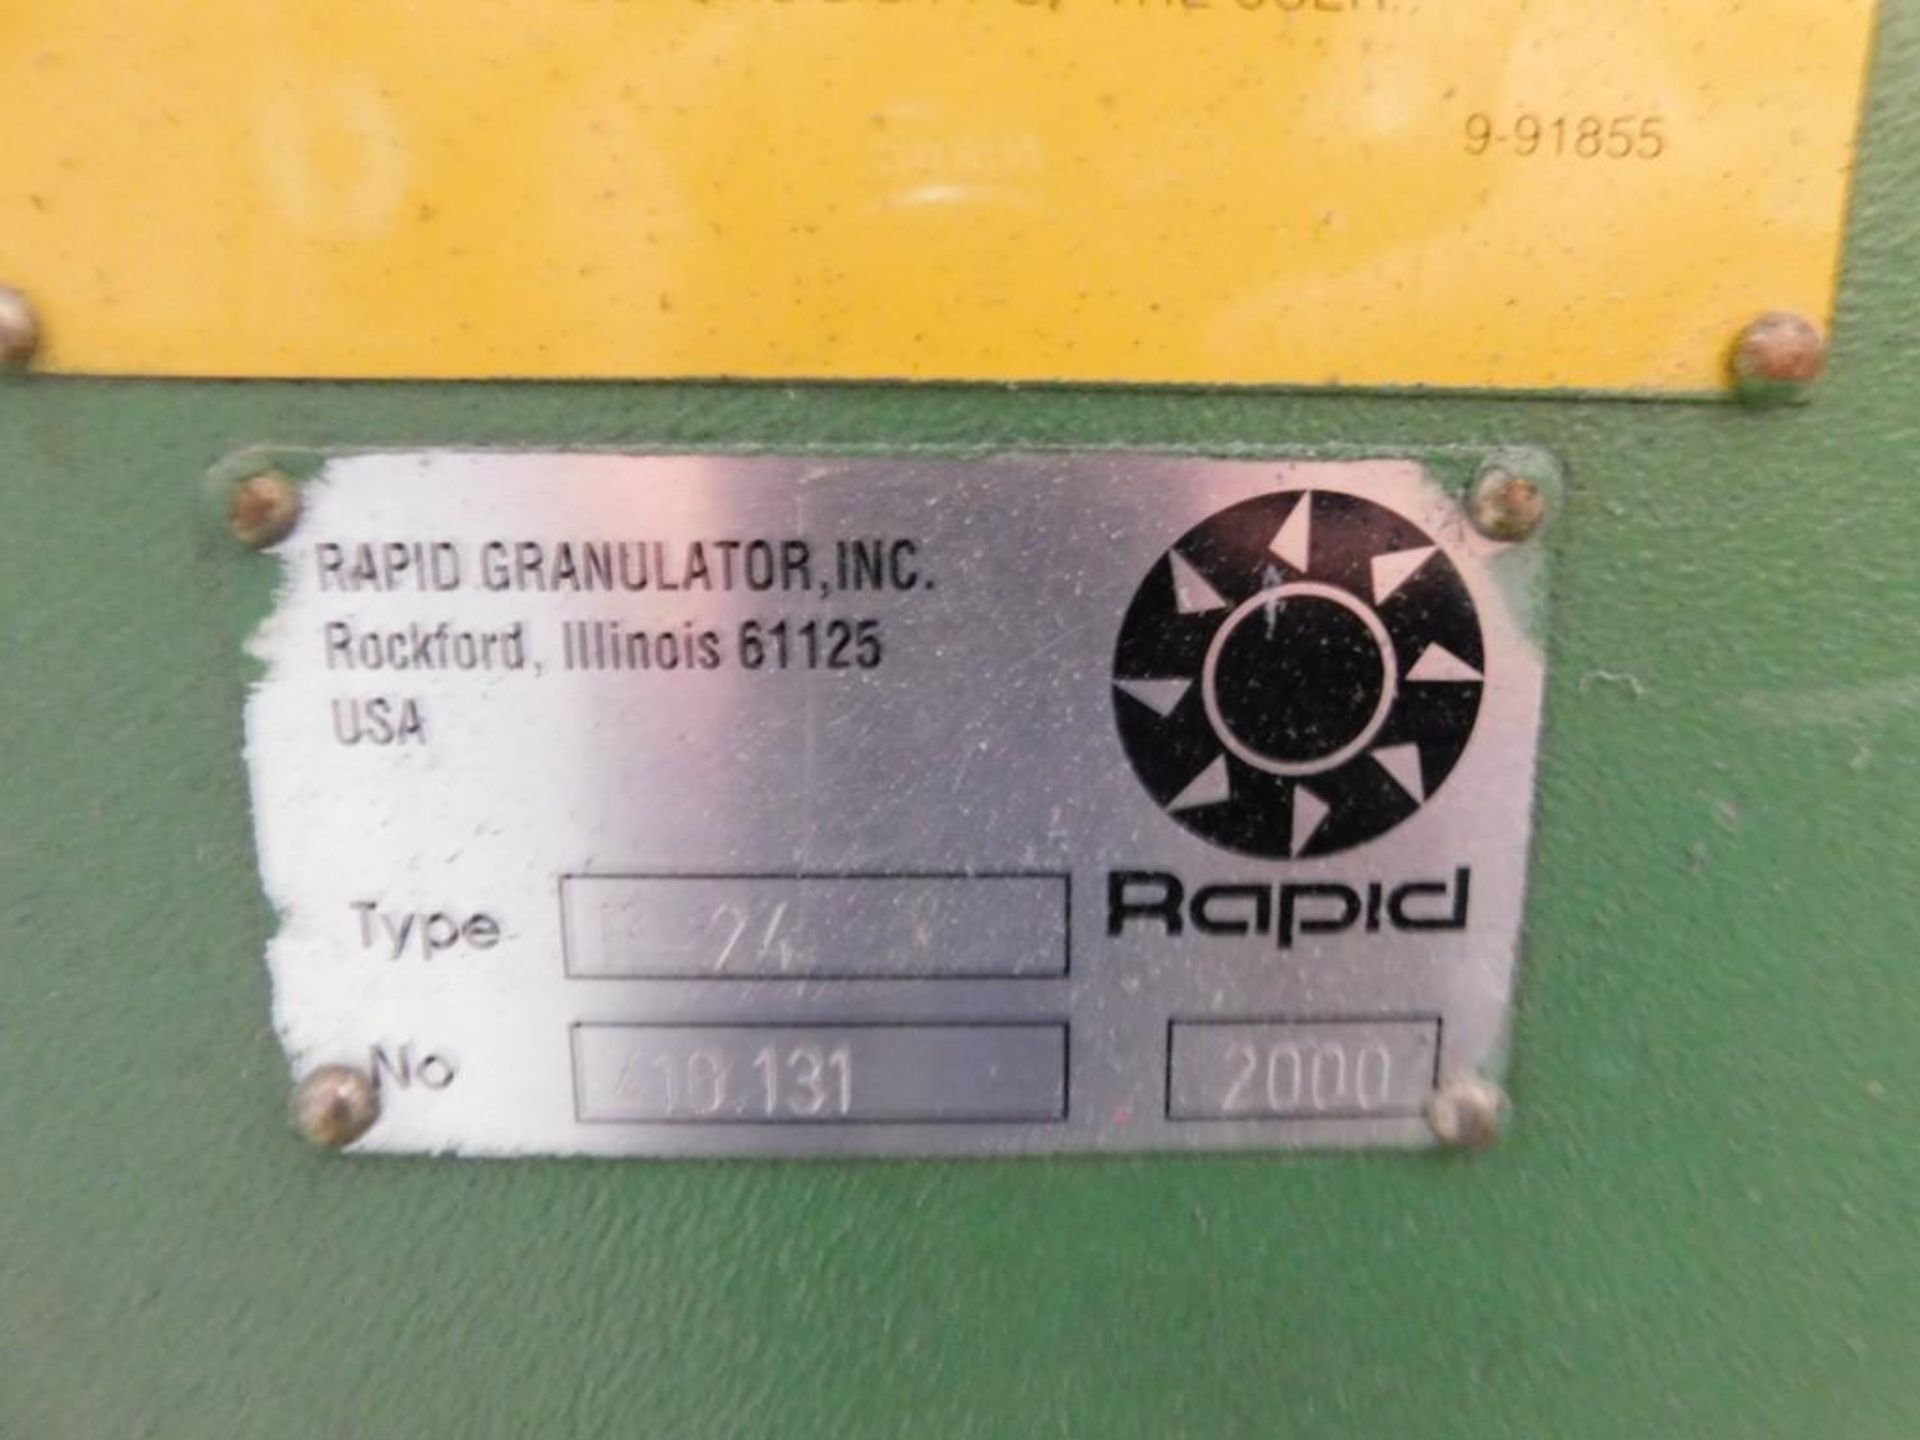 Rapid R-24 Granulator, 24' x 14" Opening, S/N 410131 (2000) - Image 5 of 5